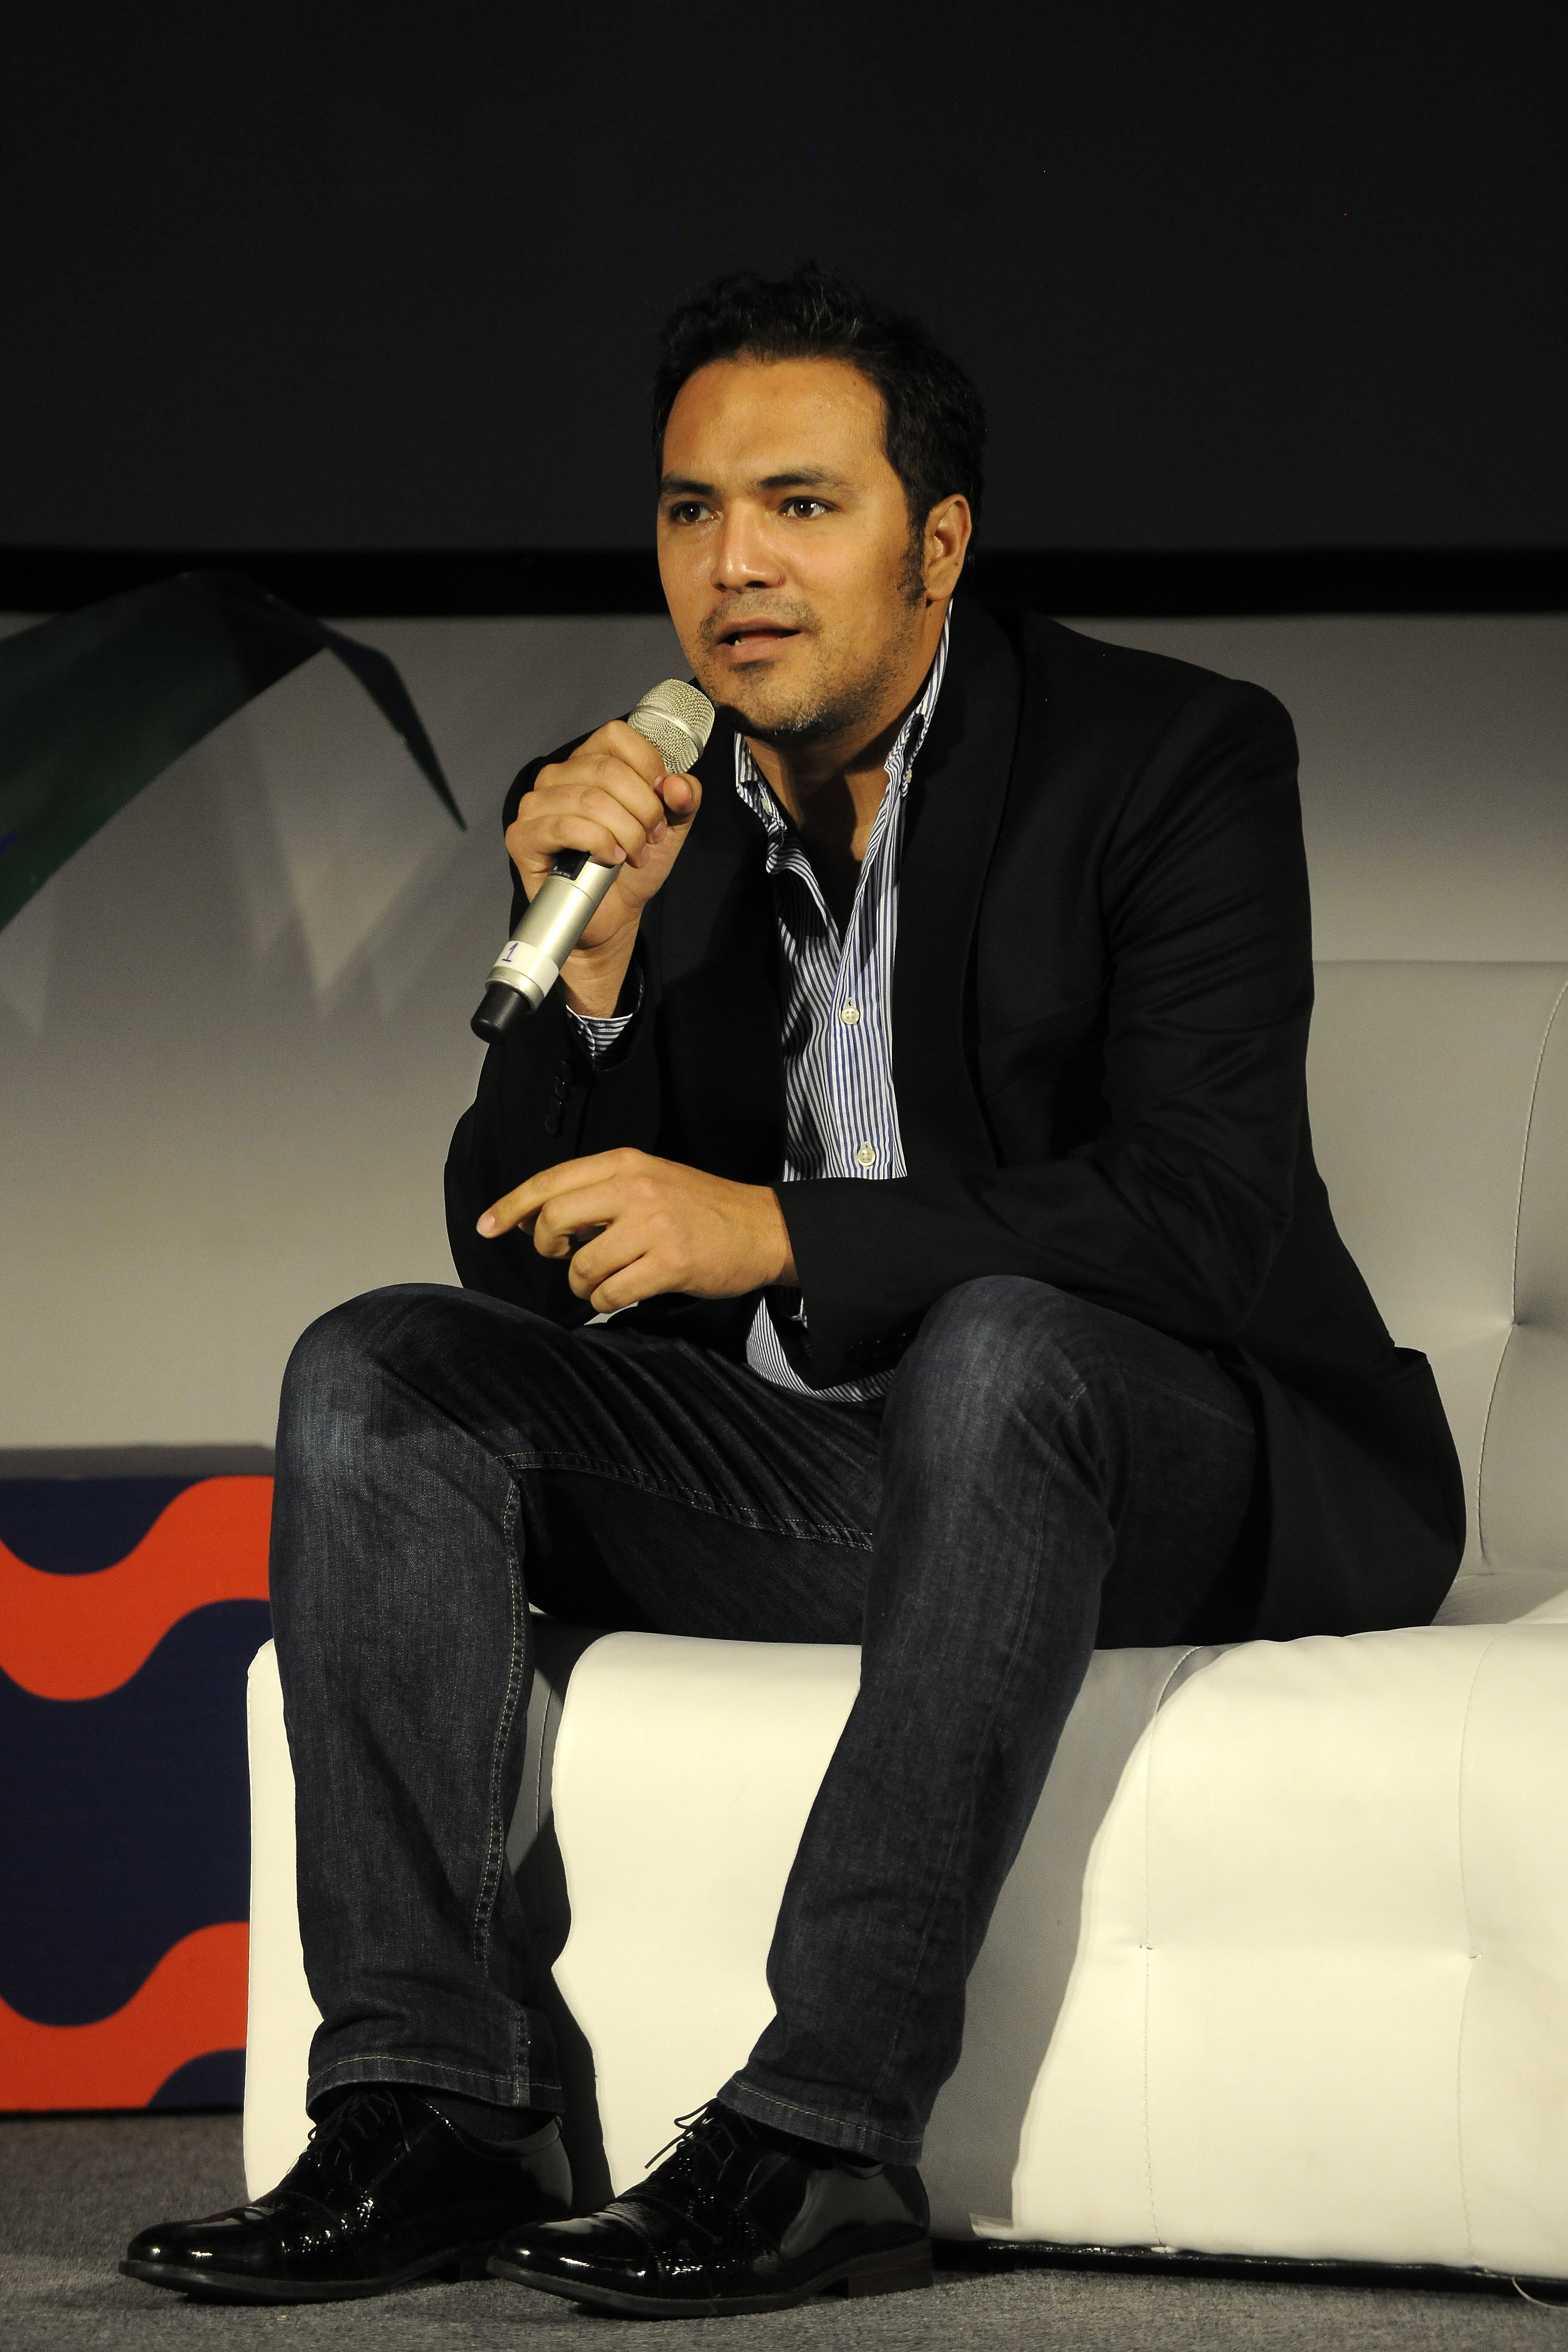 Carlos Ciurlizza at the press conference of SEBASTIAN at the 2015 Guadalajara International Film Festival - Mexico.